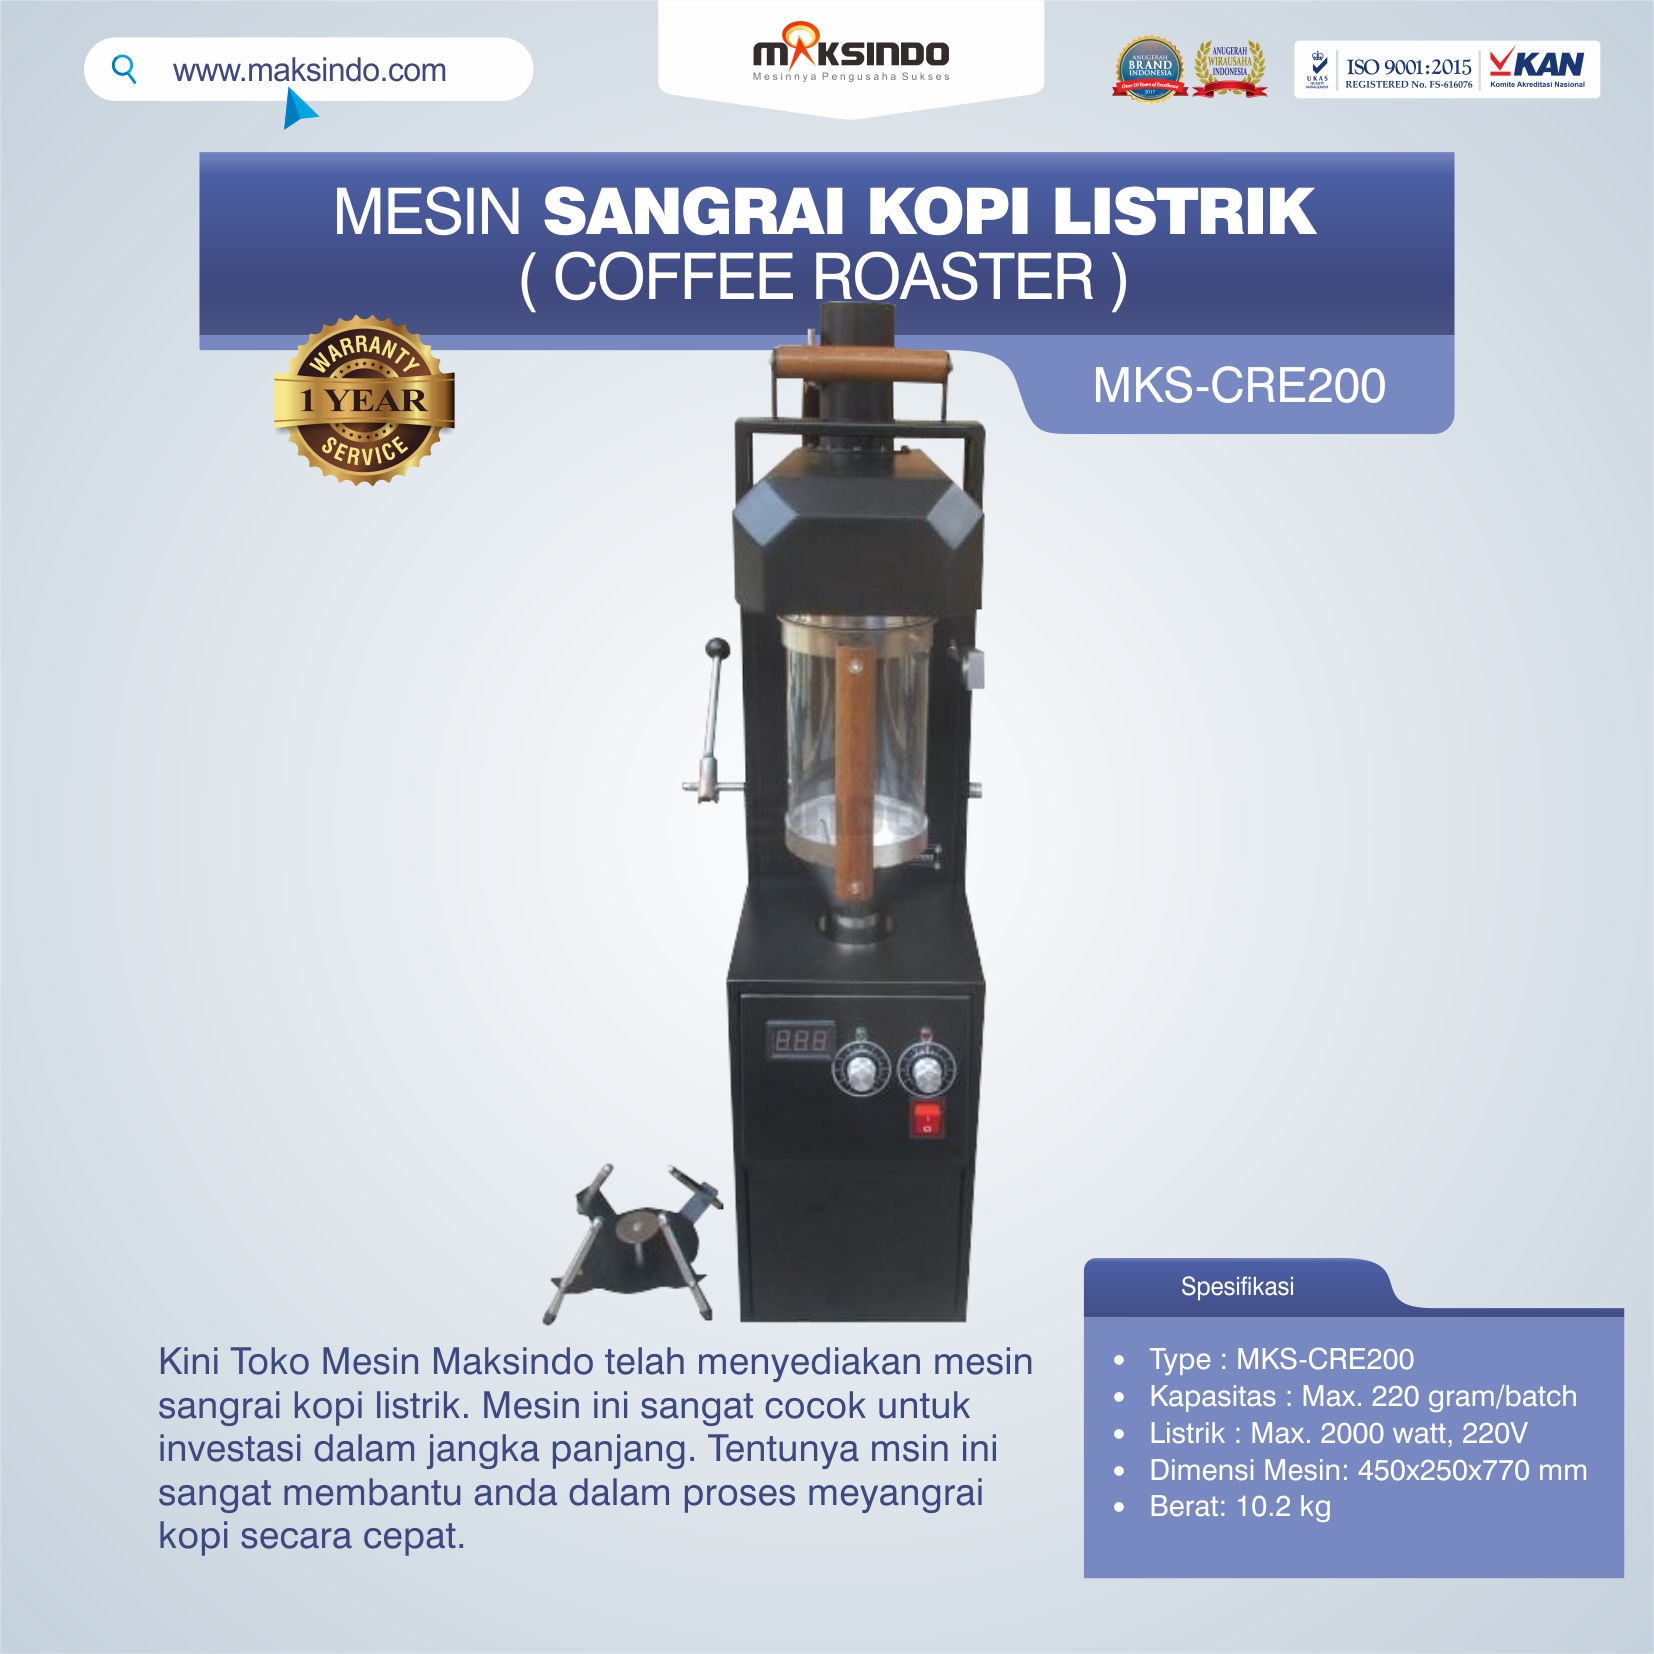 Mesin Sangrai Kopi Listrik (Coffee Roaster) MKS-CRE200